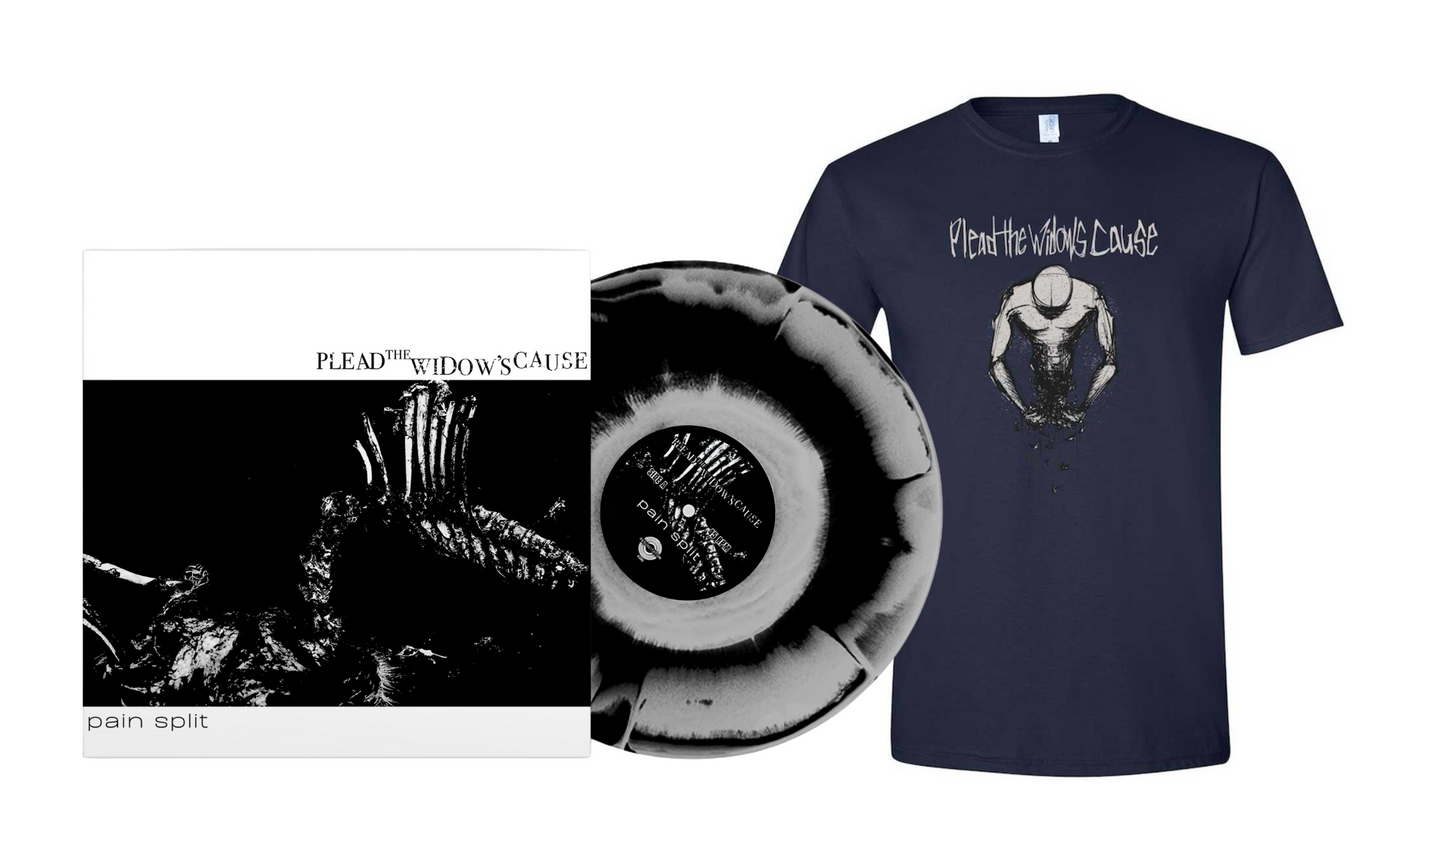 Plead the Widow's Cause - Deluxe 12" LP + T-Shirt Bundle